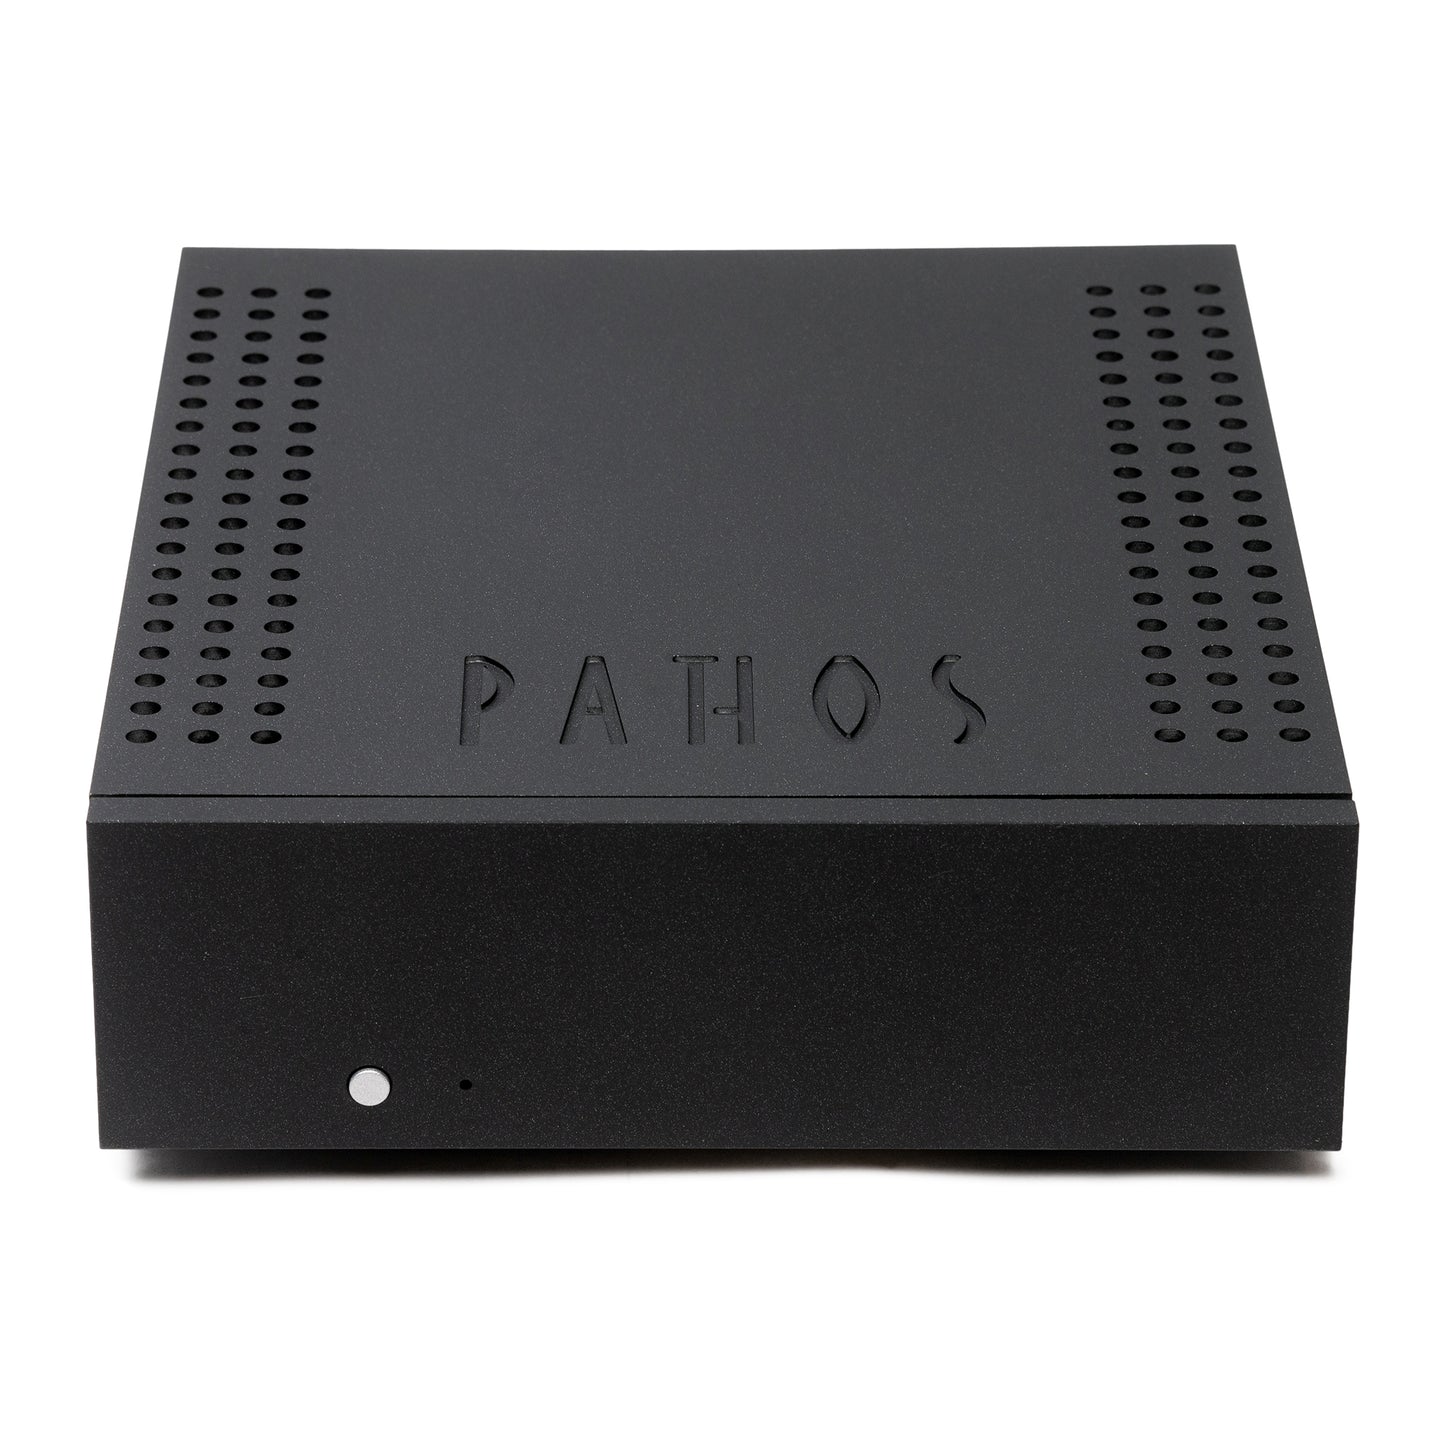 Pathos AmpliD Stereo Power Amplifier